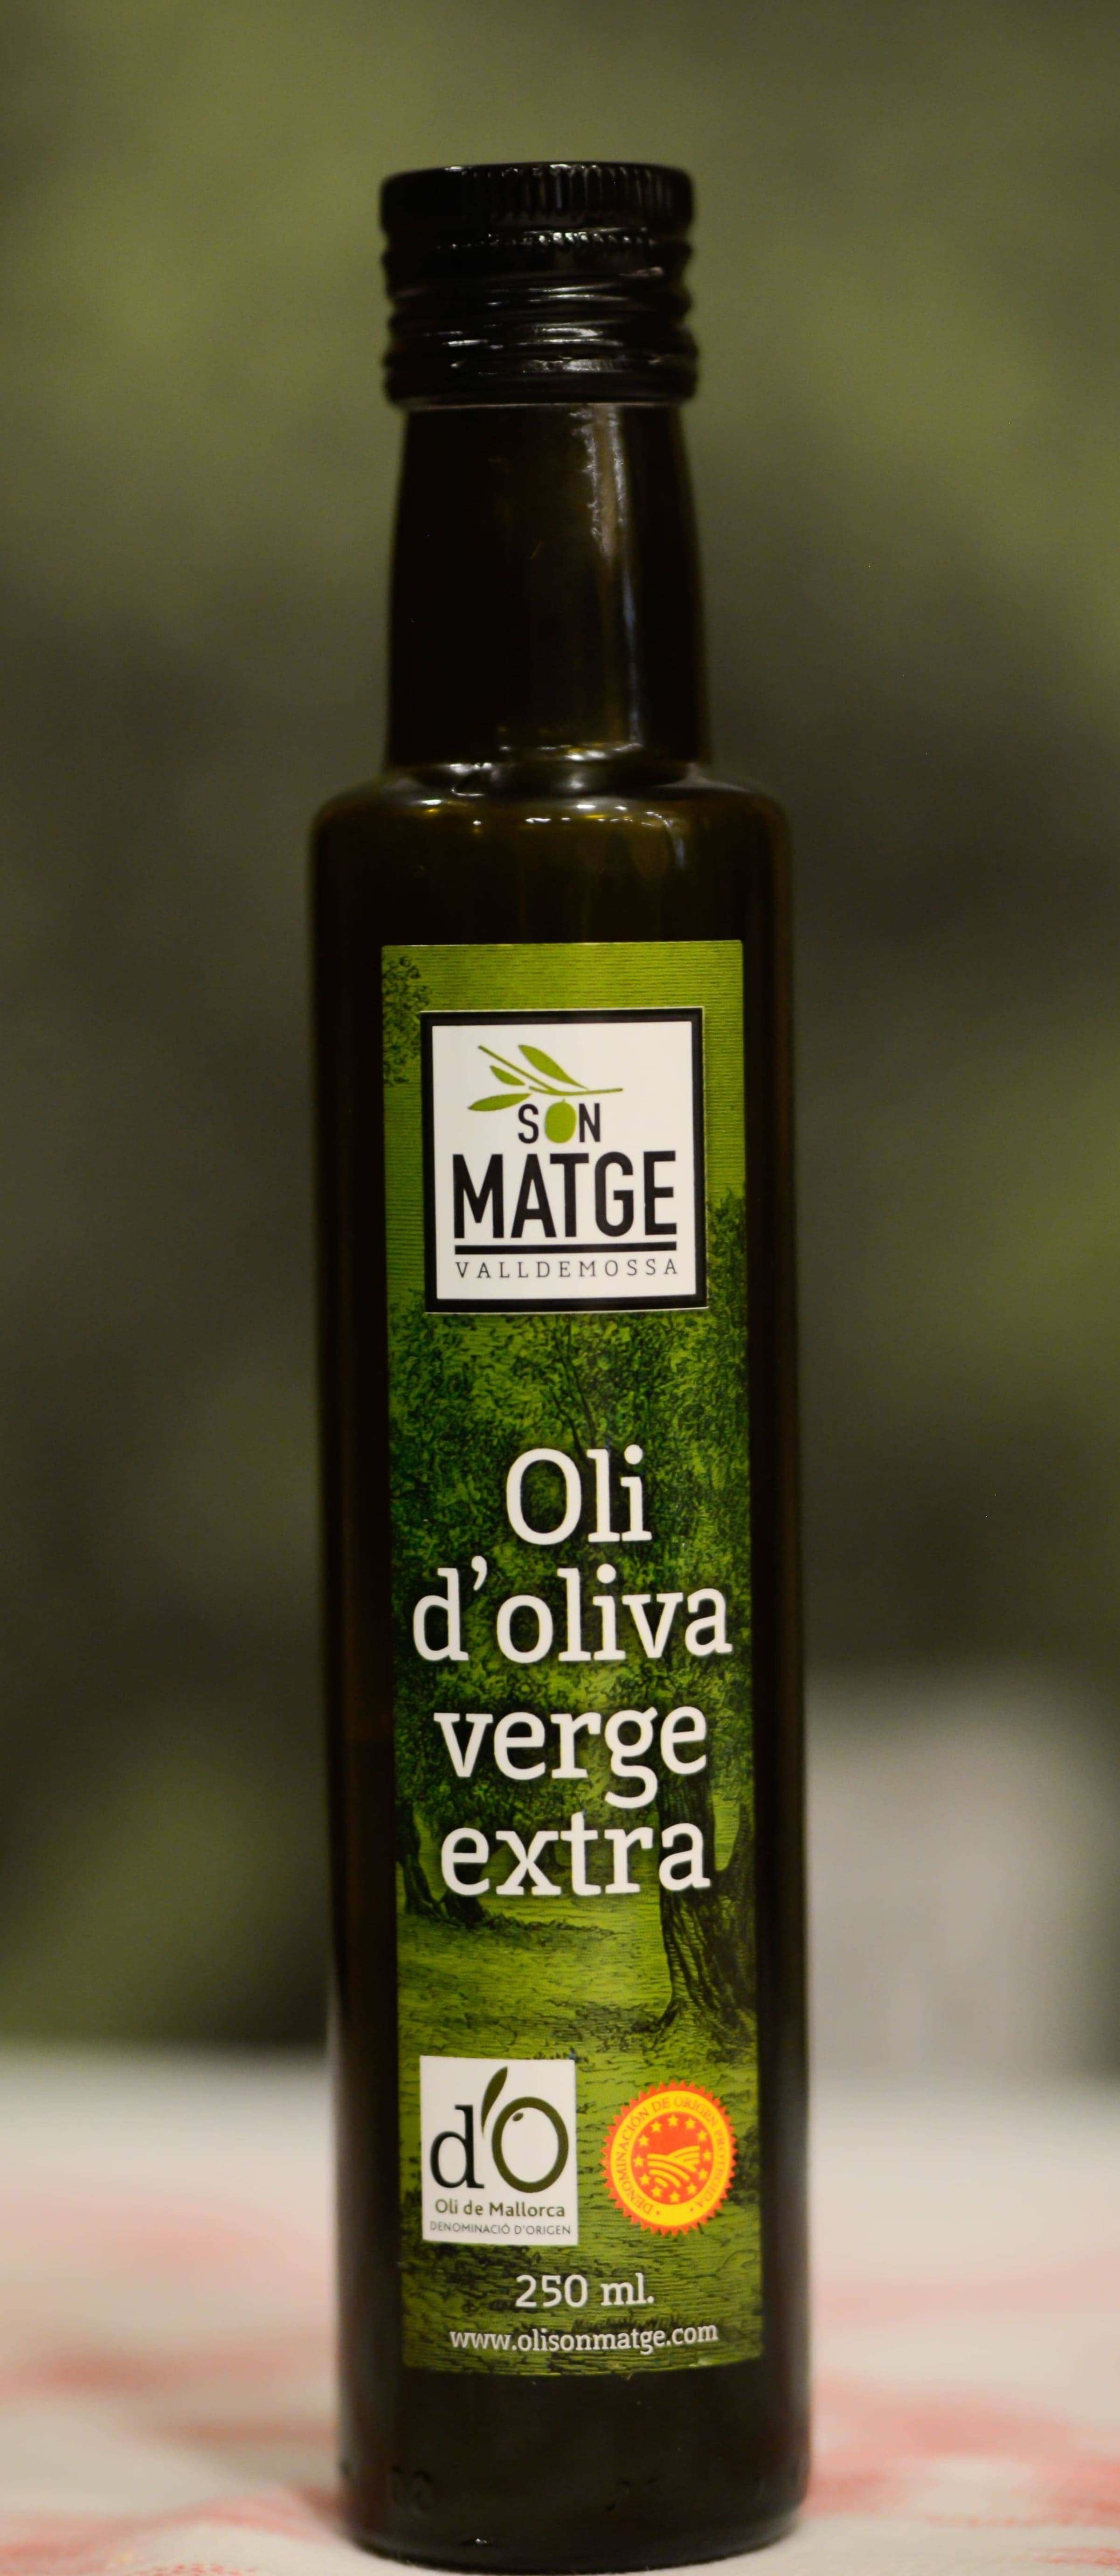 Son Matge oil, DOP Oli de Mallorca 250 ml bottle